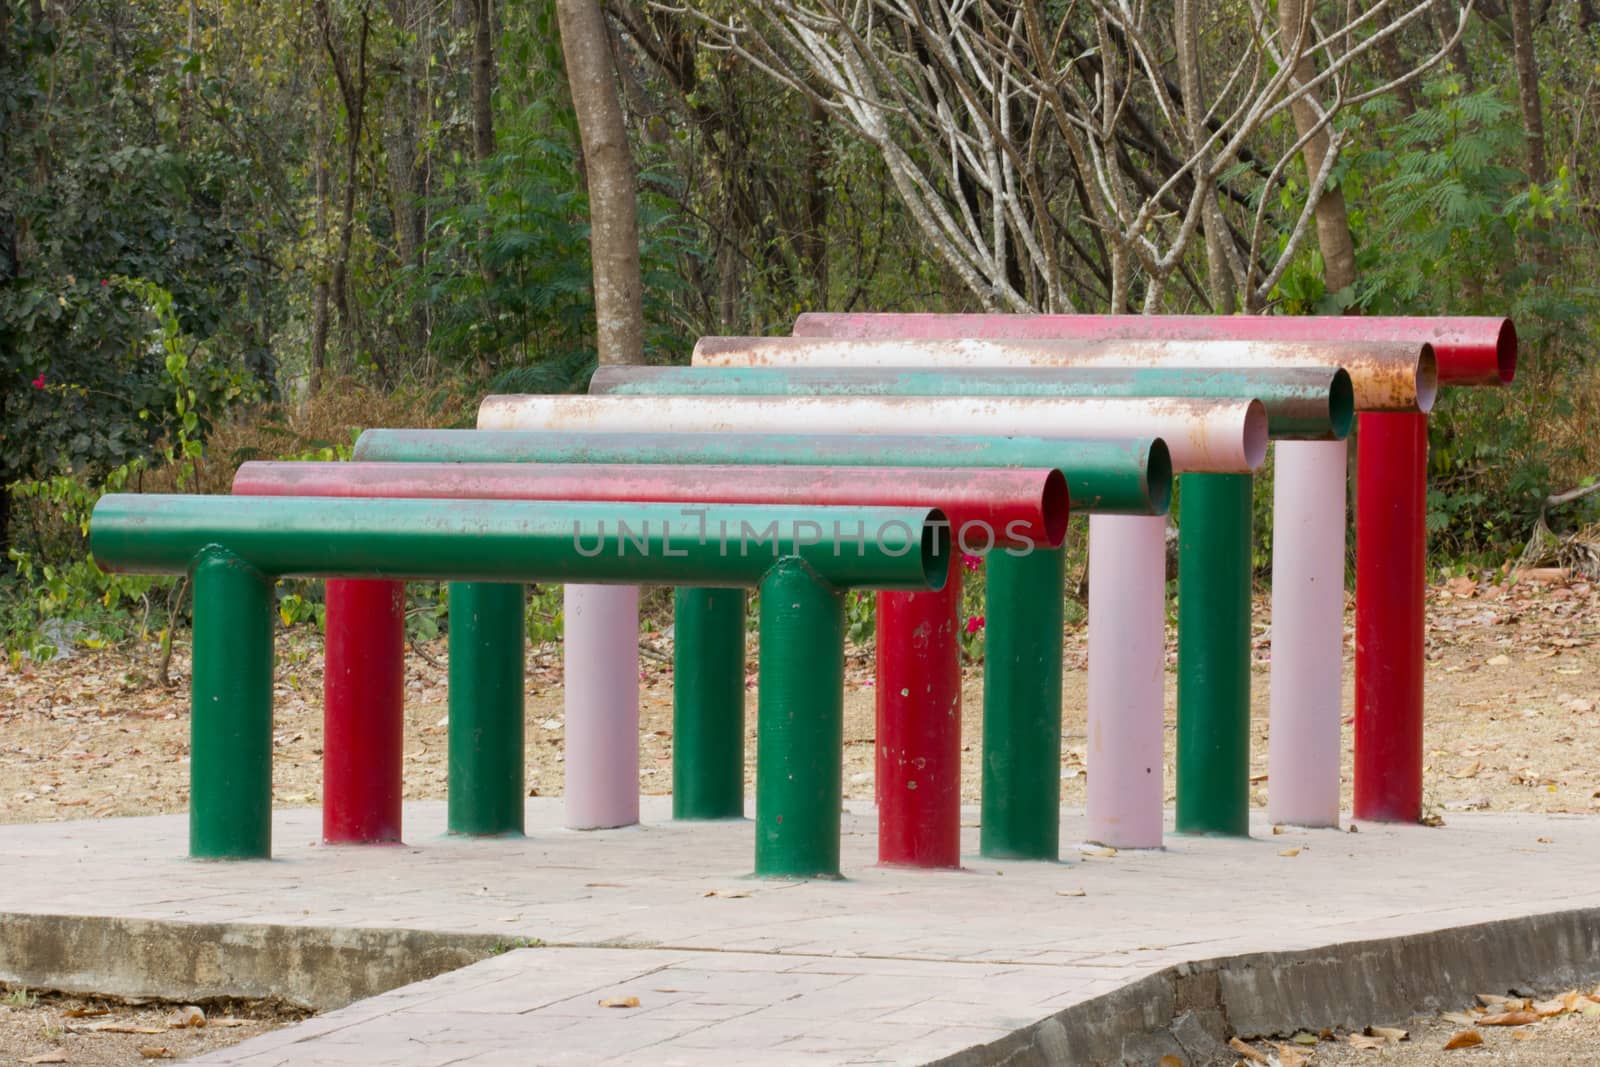 colorful exercise equipment in public park